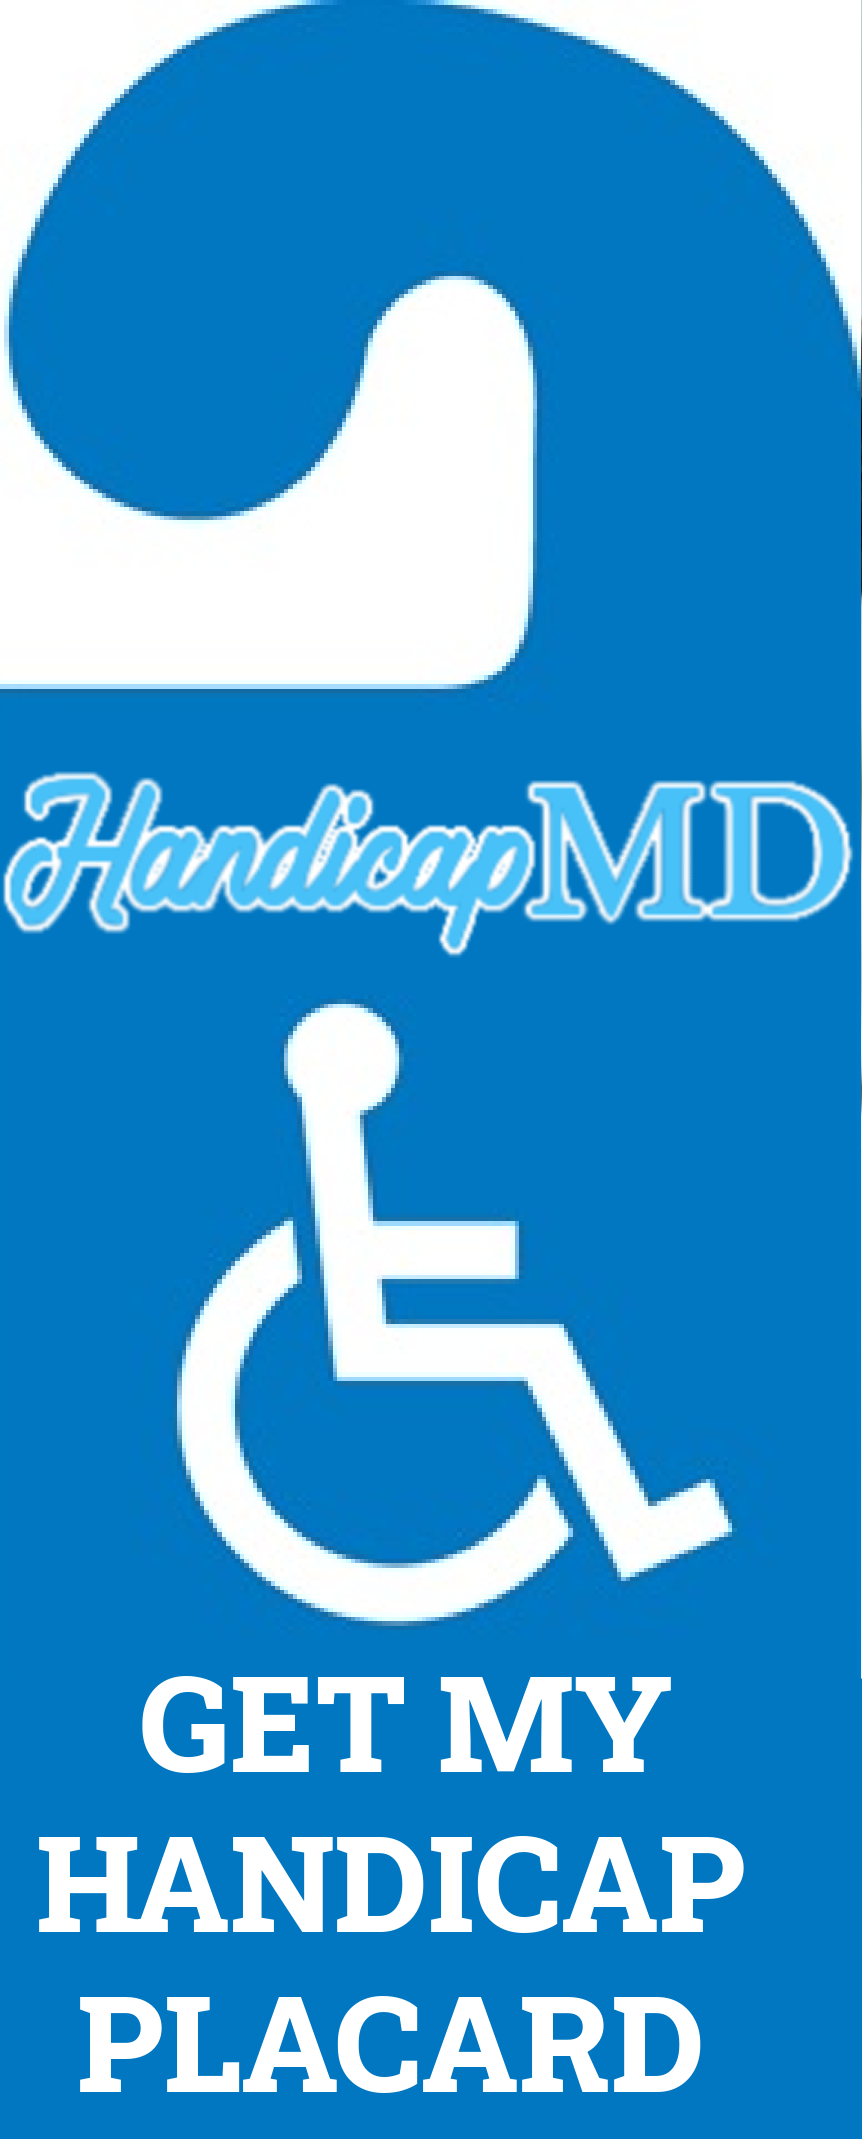 North Carolina Handicap Parking Placards